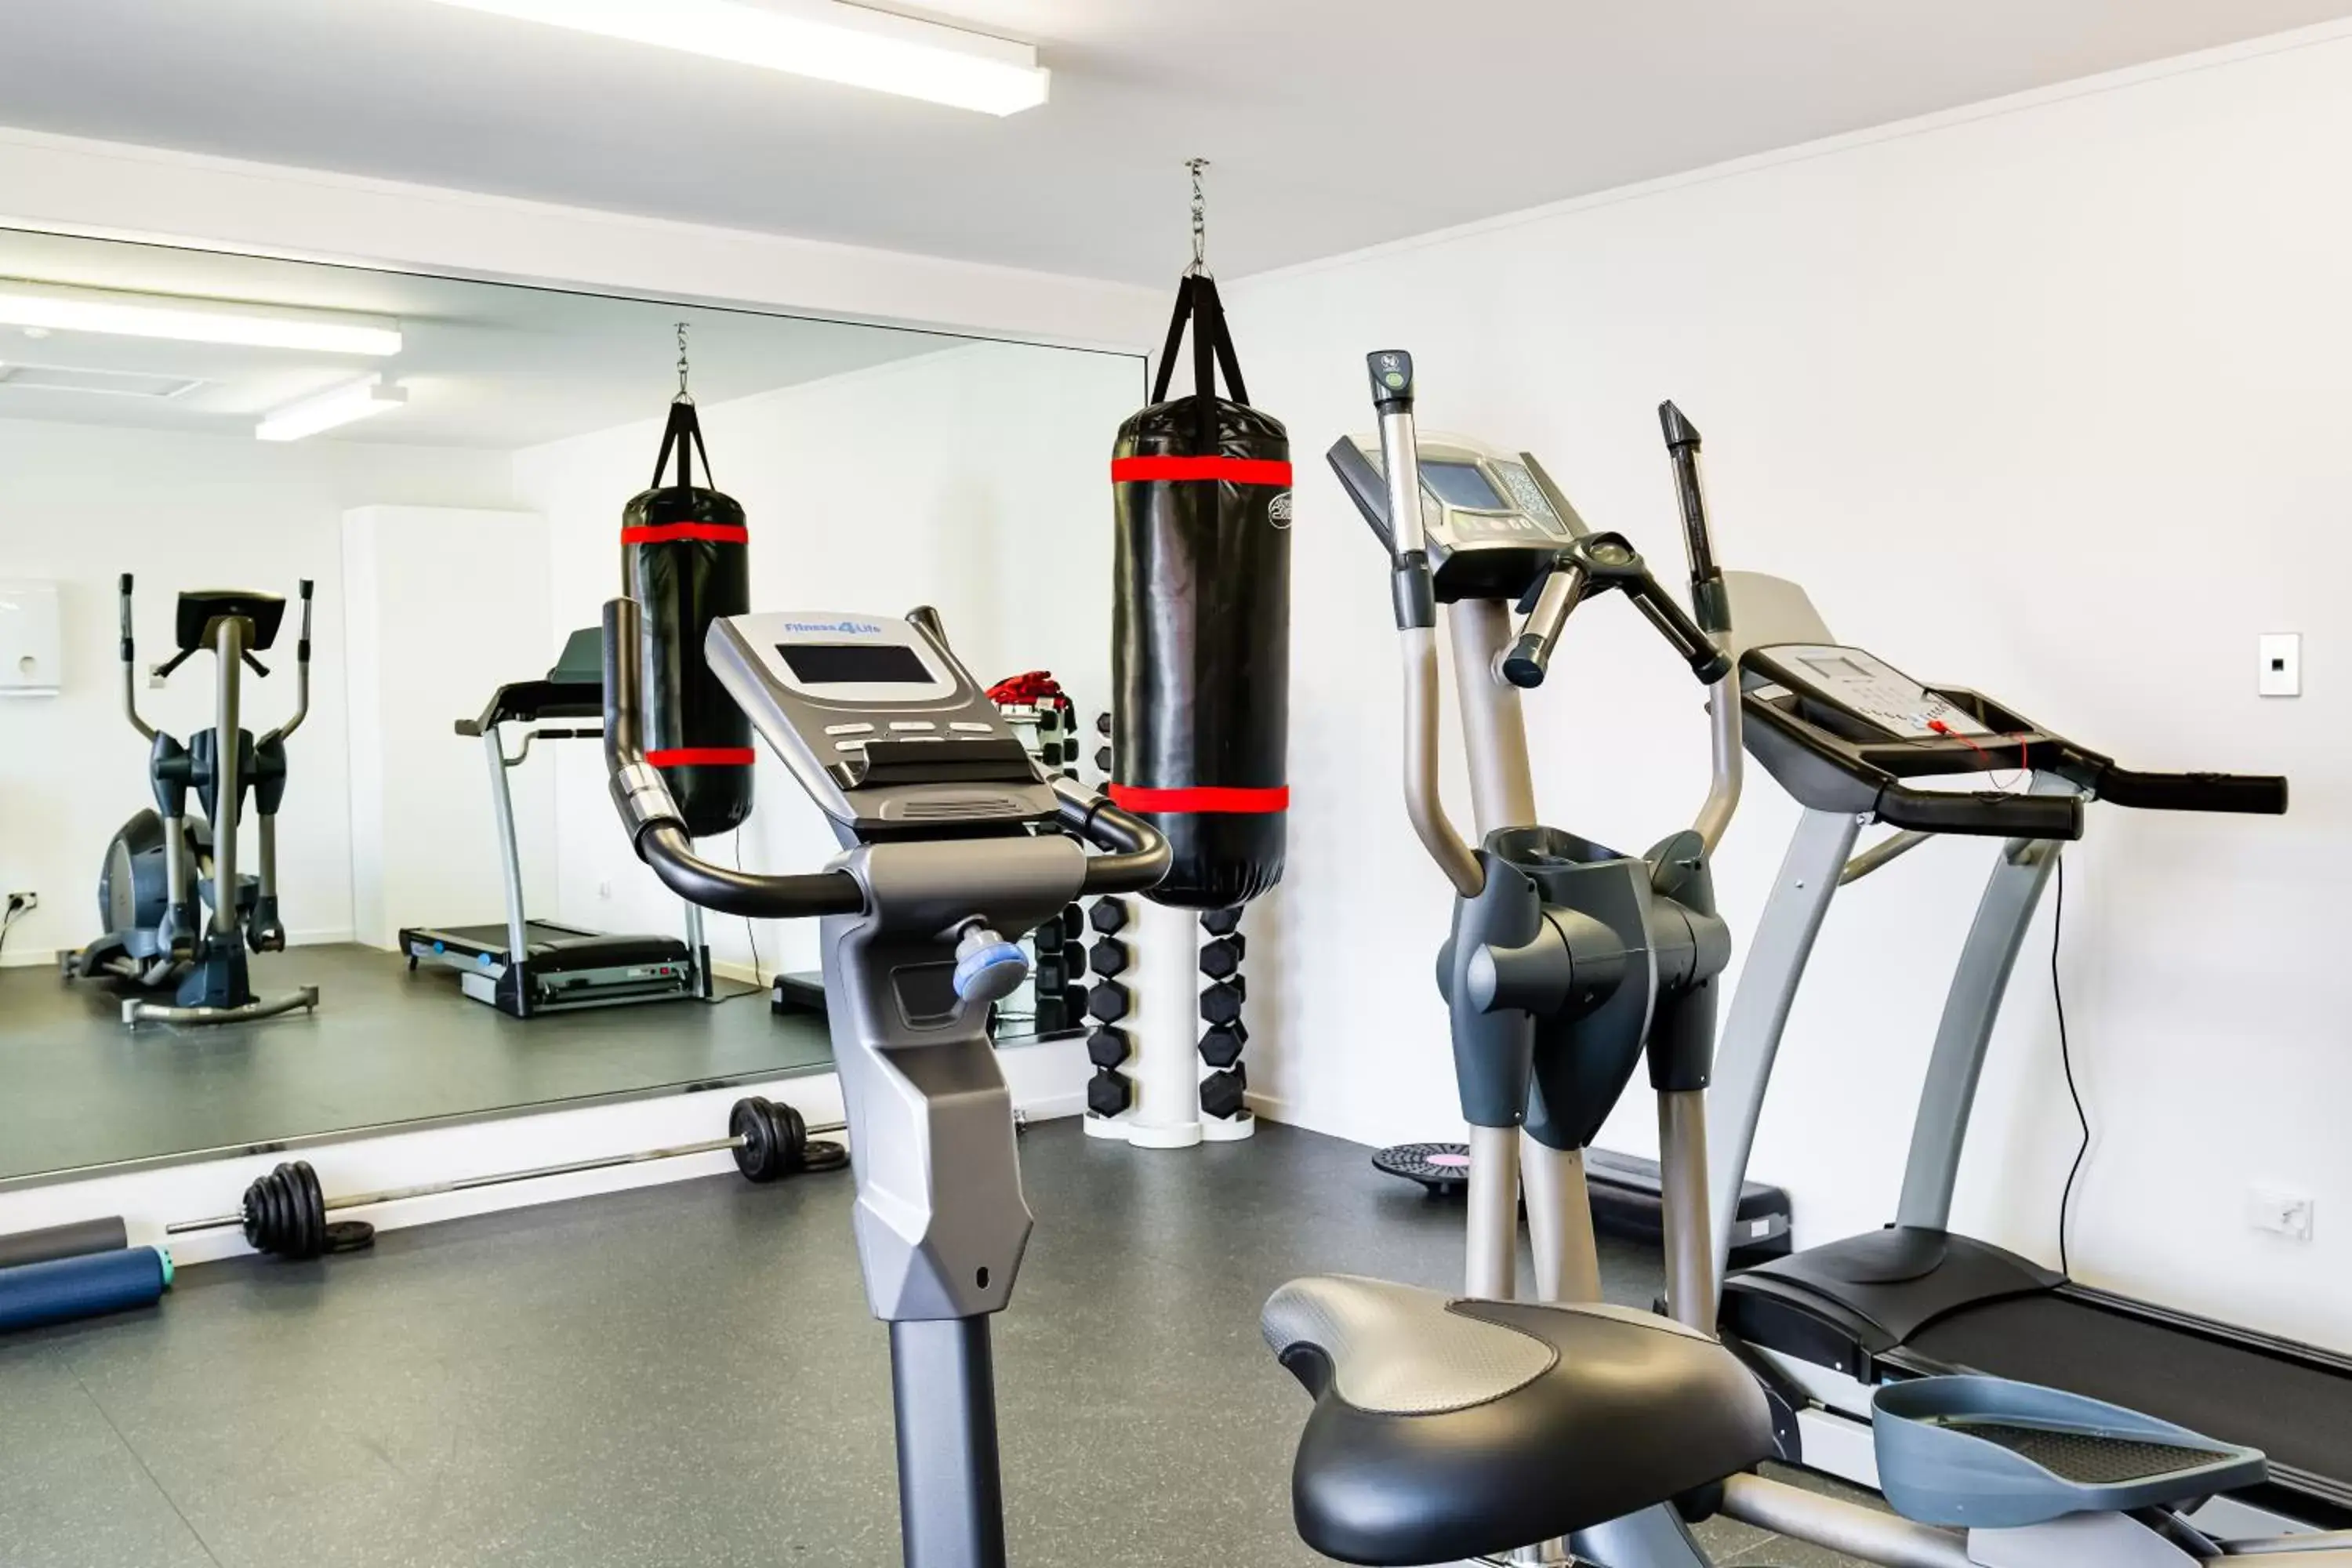 Fitness centre/facilities, Fitness Center/Facilities in On The Point - Lake Rotorua